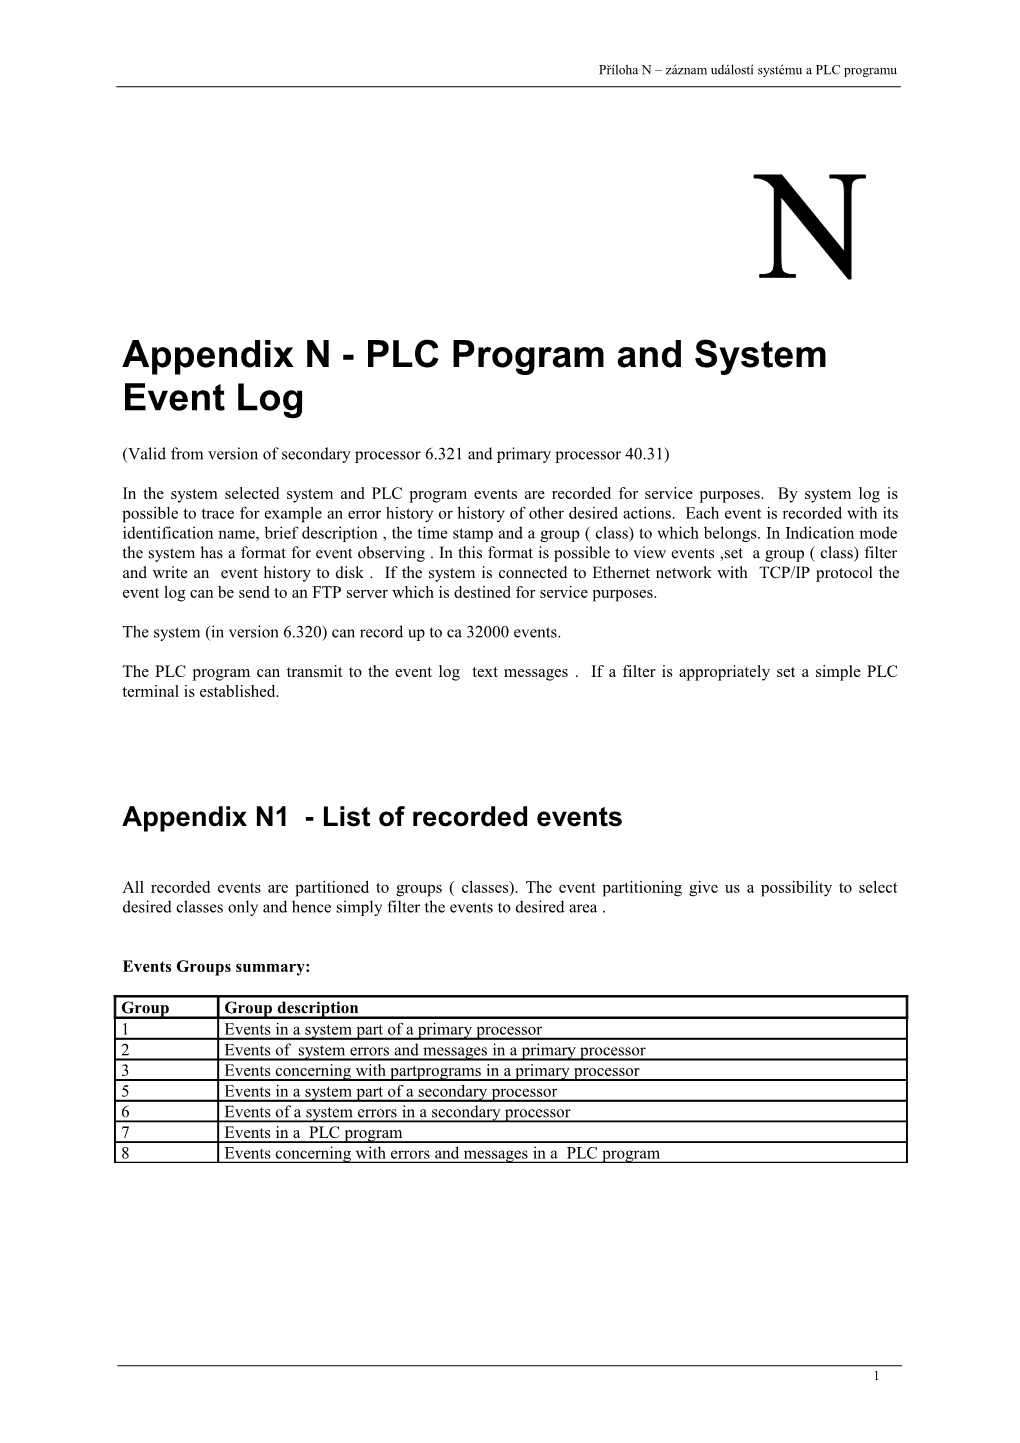 Appendix N - PLC Program and System Event Log